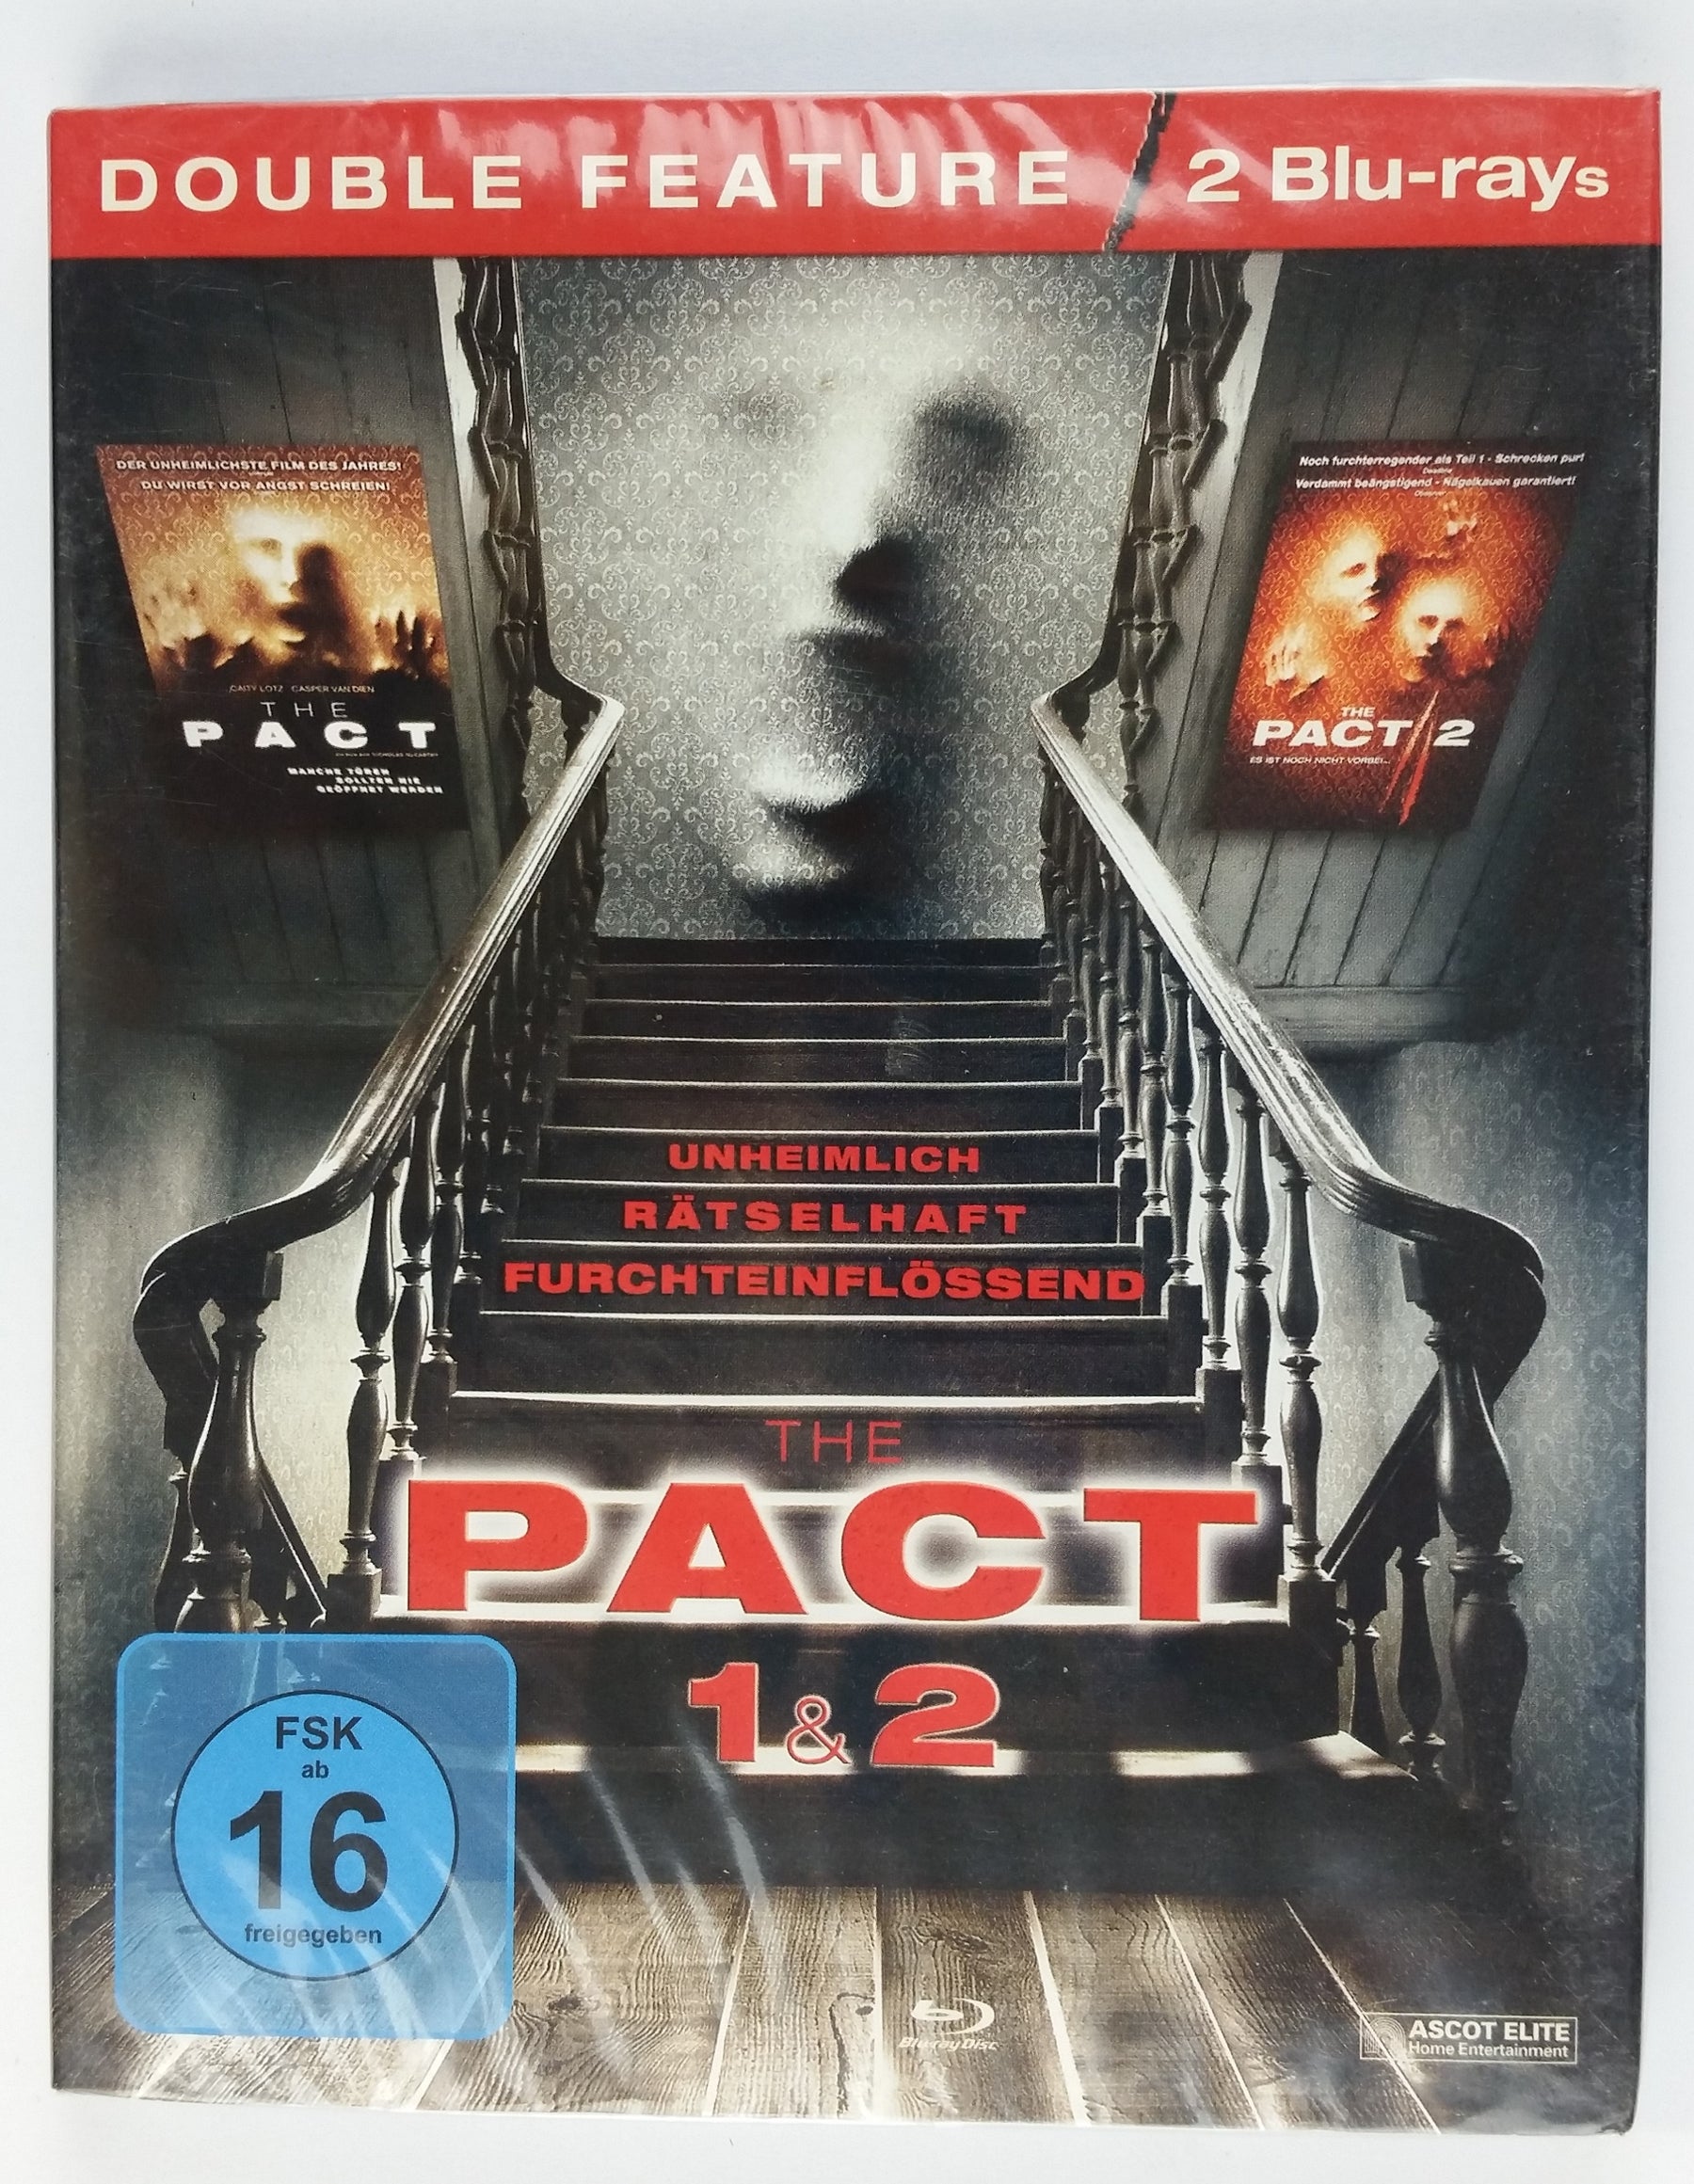 The Pact 1 + 2 Box (Blu-ray) [Neu]